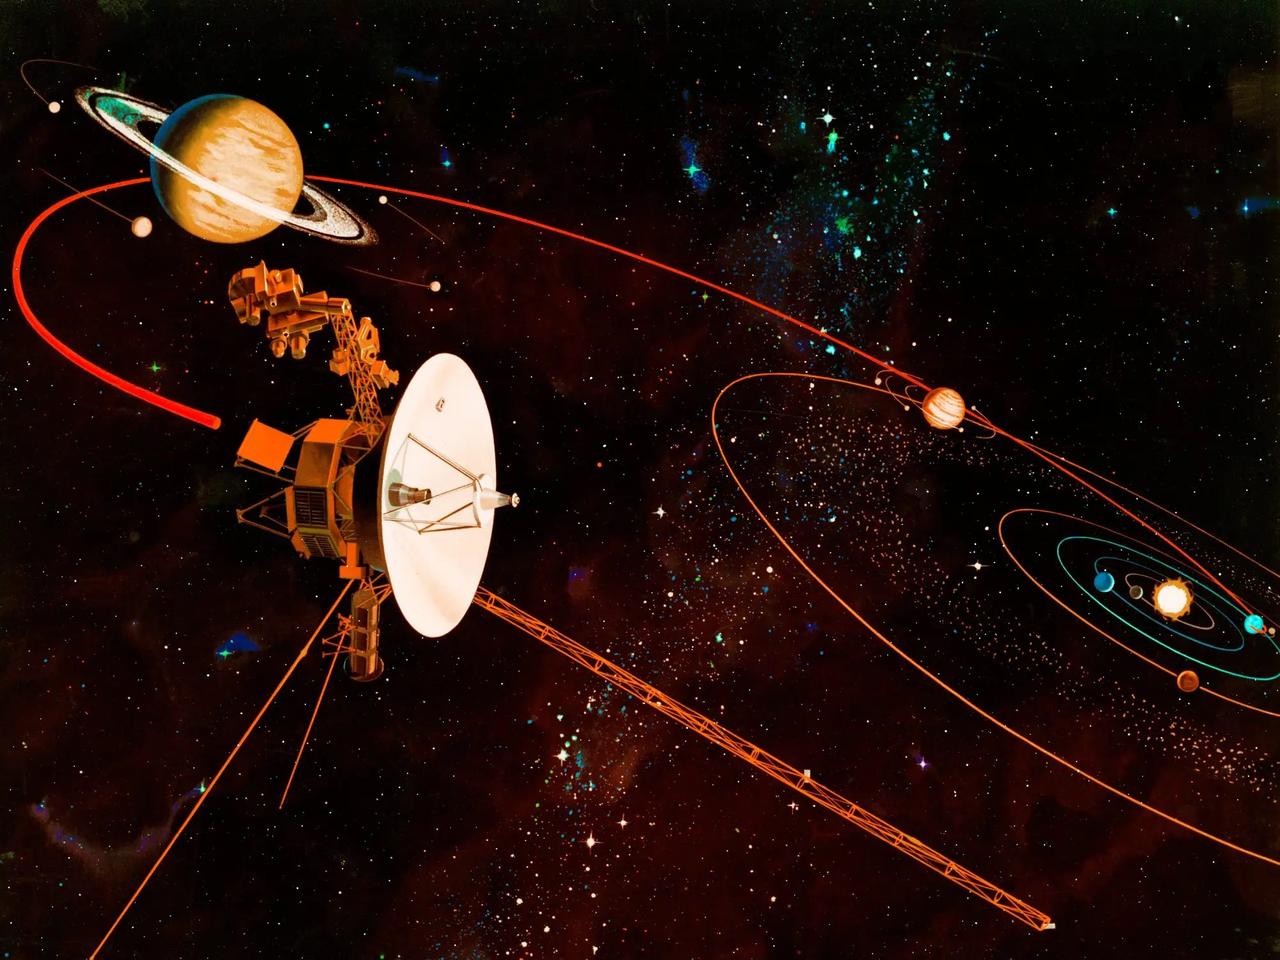 NASAの探査機ボイジャー1号とボイジャー2号の通過予定軌道を描いた想像図（1977年ごろ作成）。